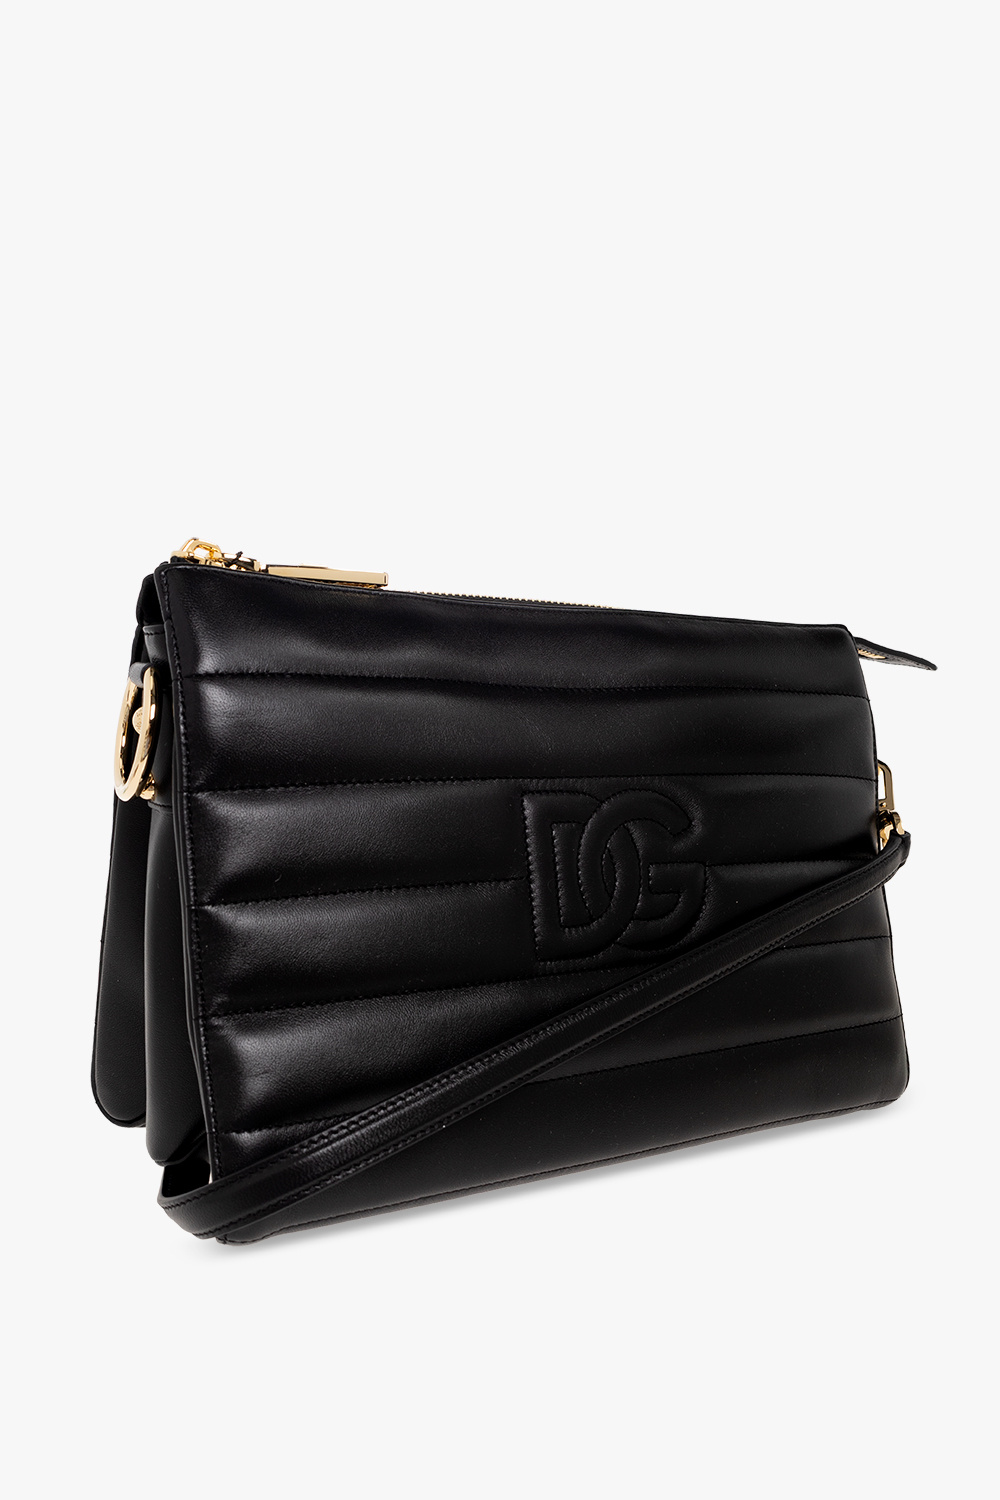 dolce sicilia & Gabbana ‘Tris Medium’ shoulder bag